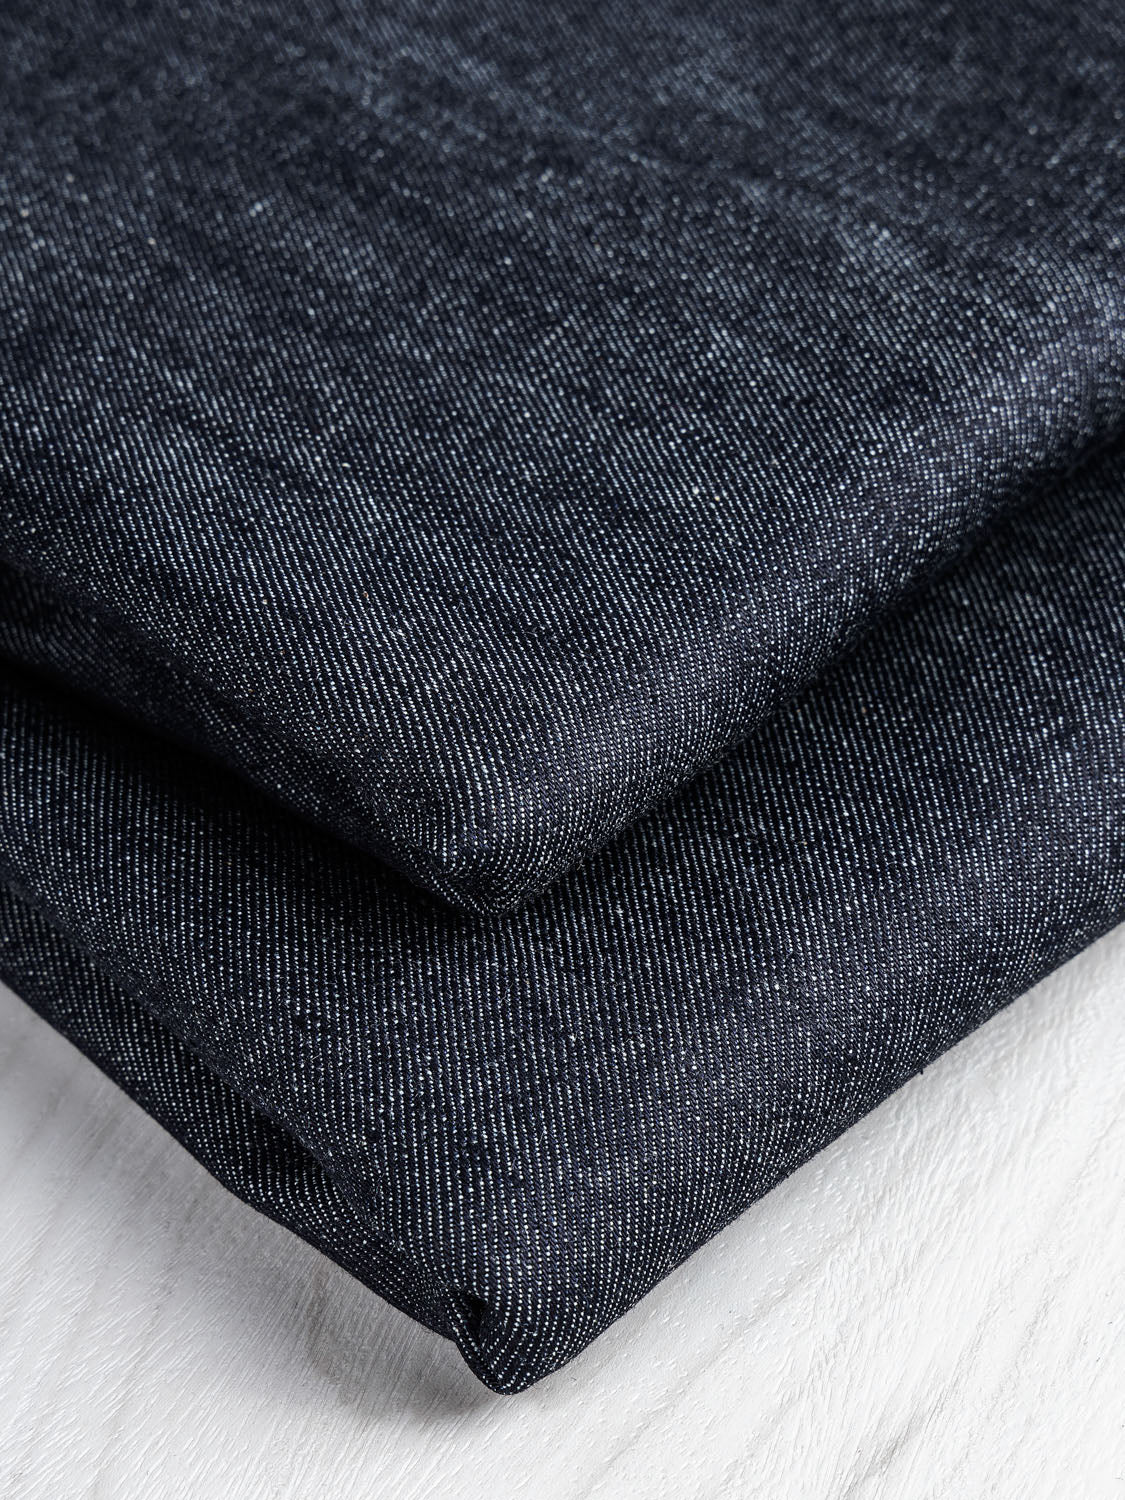 Elastic Free Jean Fabric Jeanet 16s Yarn Denim T/C Twill Denim Fabric -  China Denim and Cotton Denim price